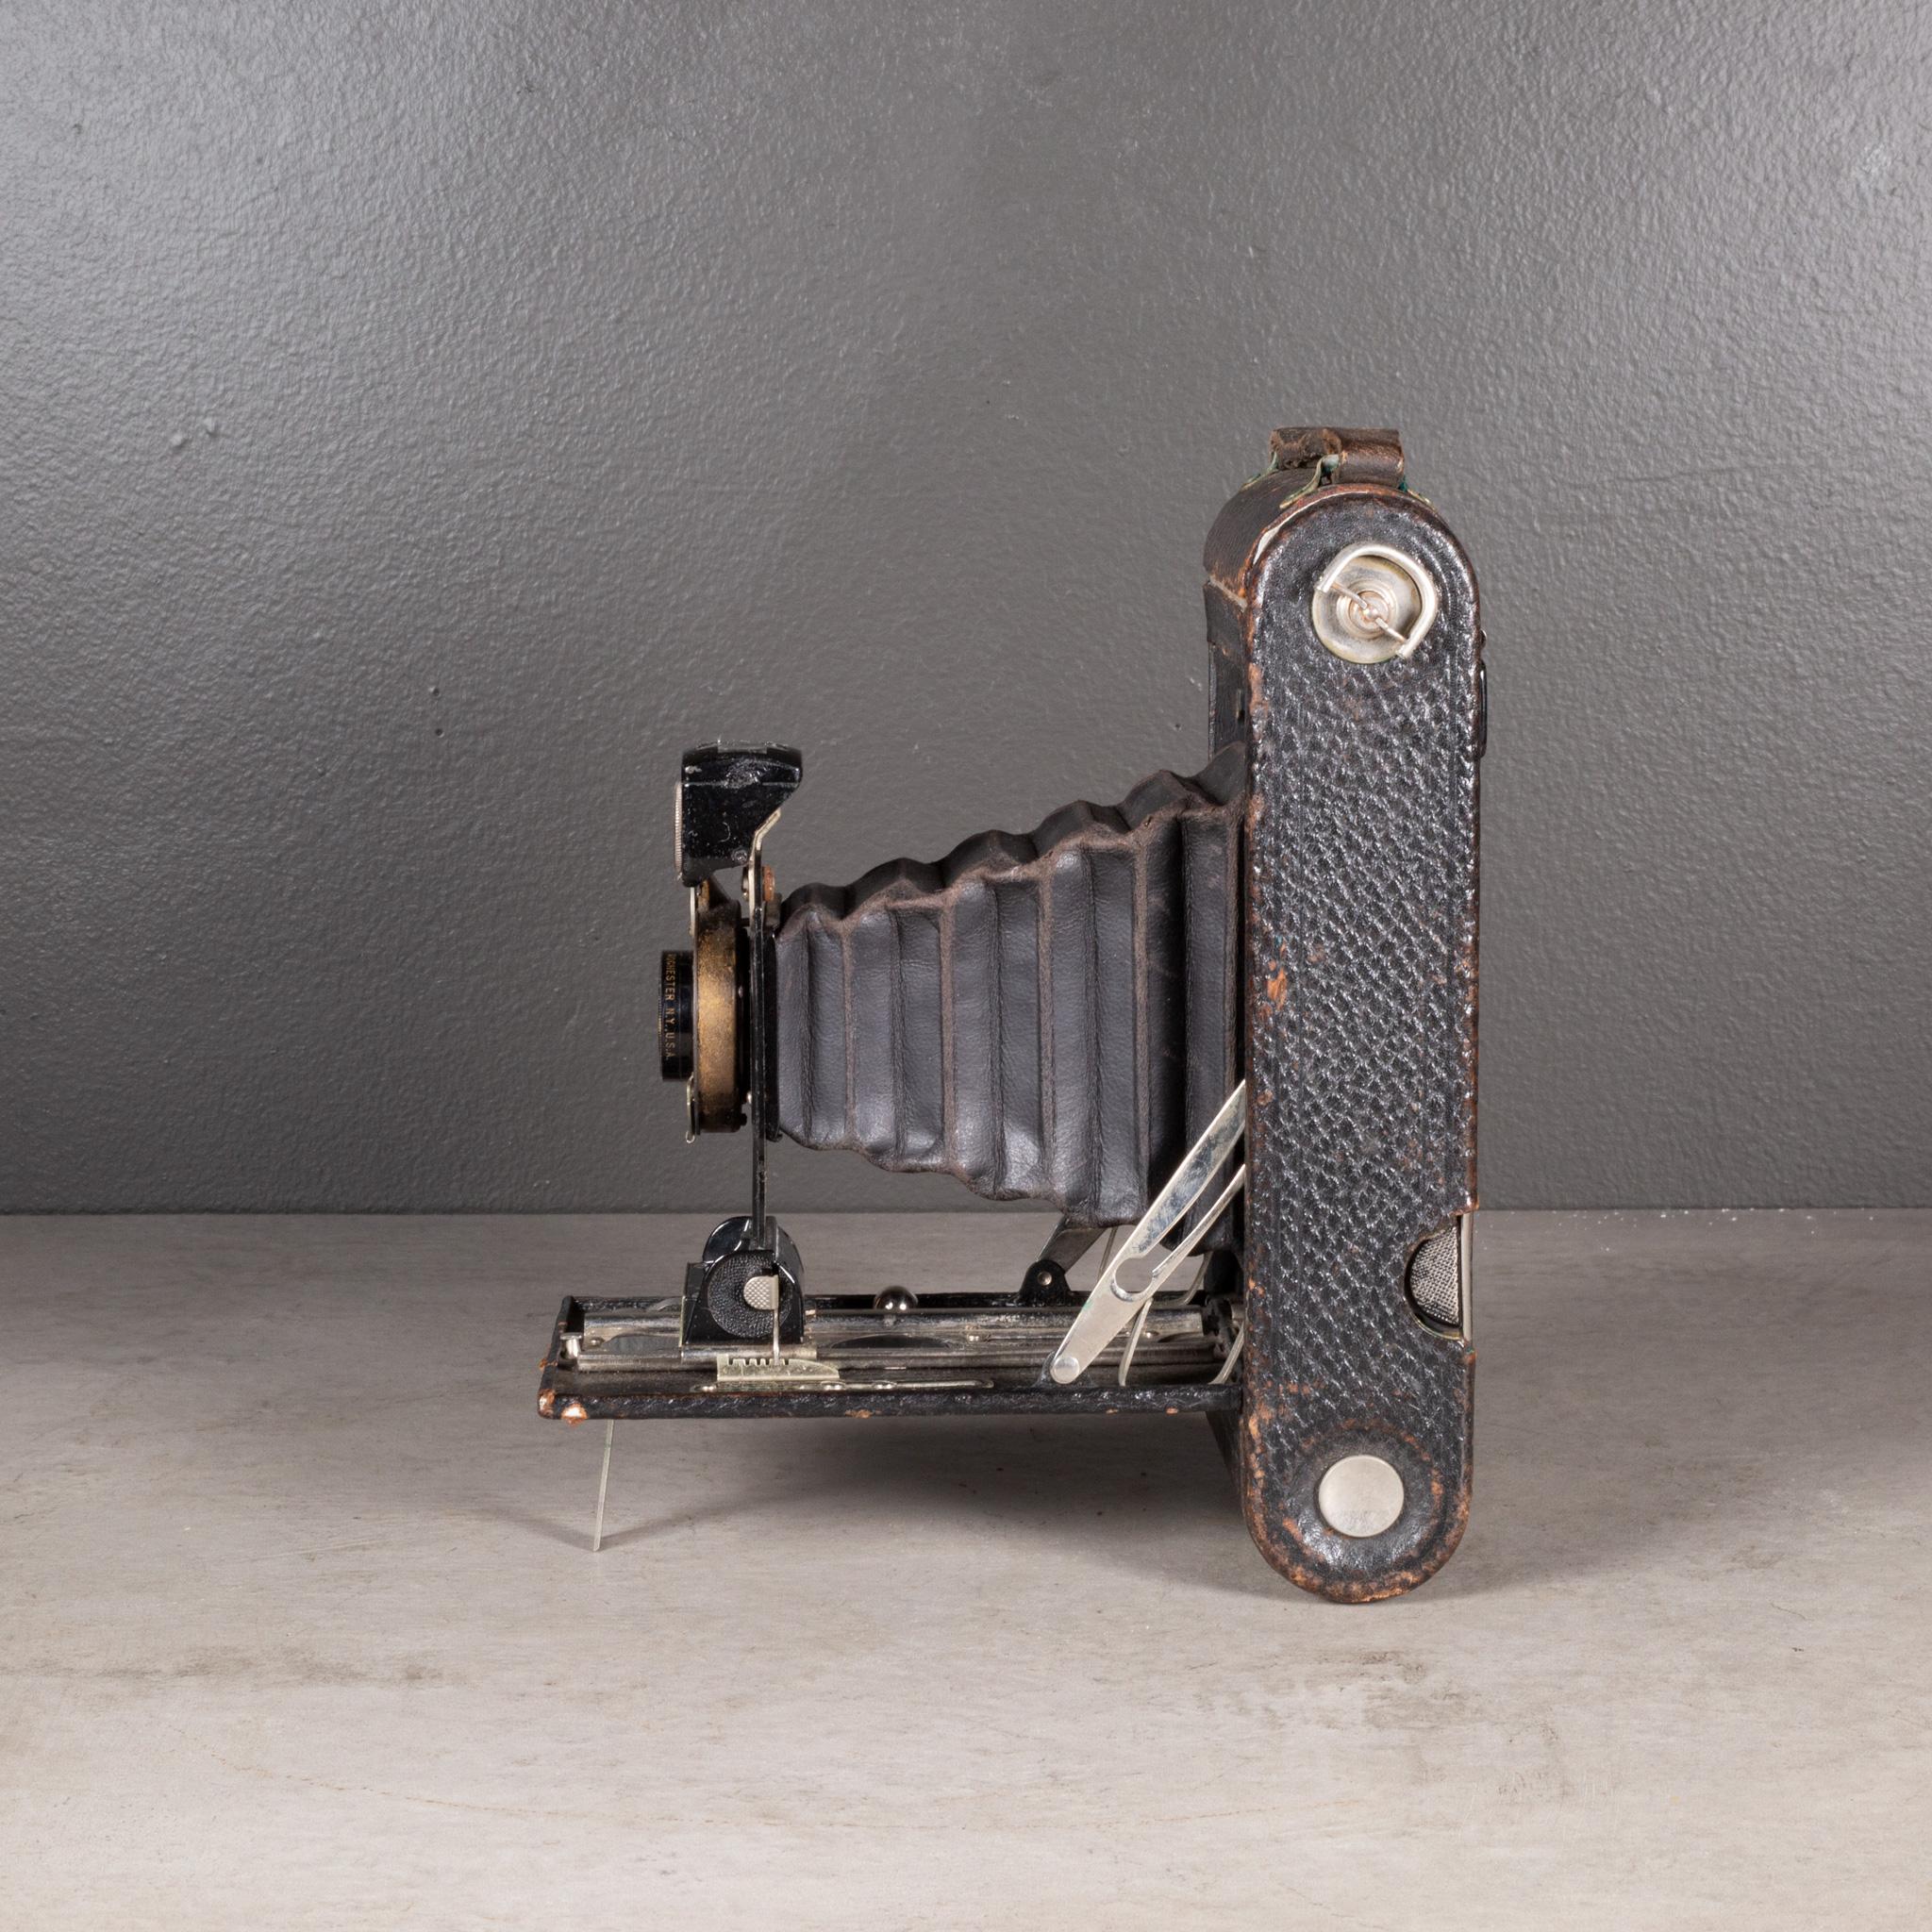 antique kodak camera